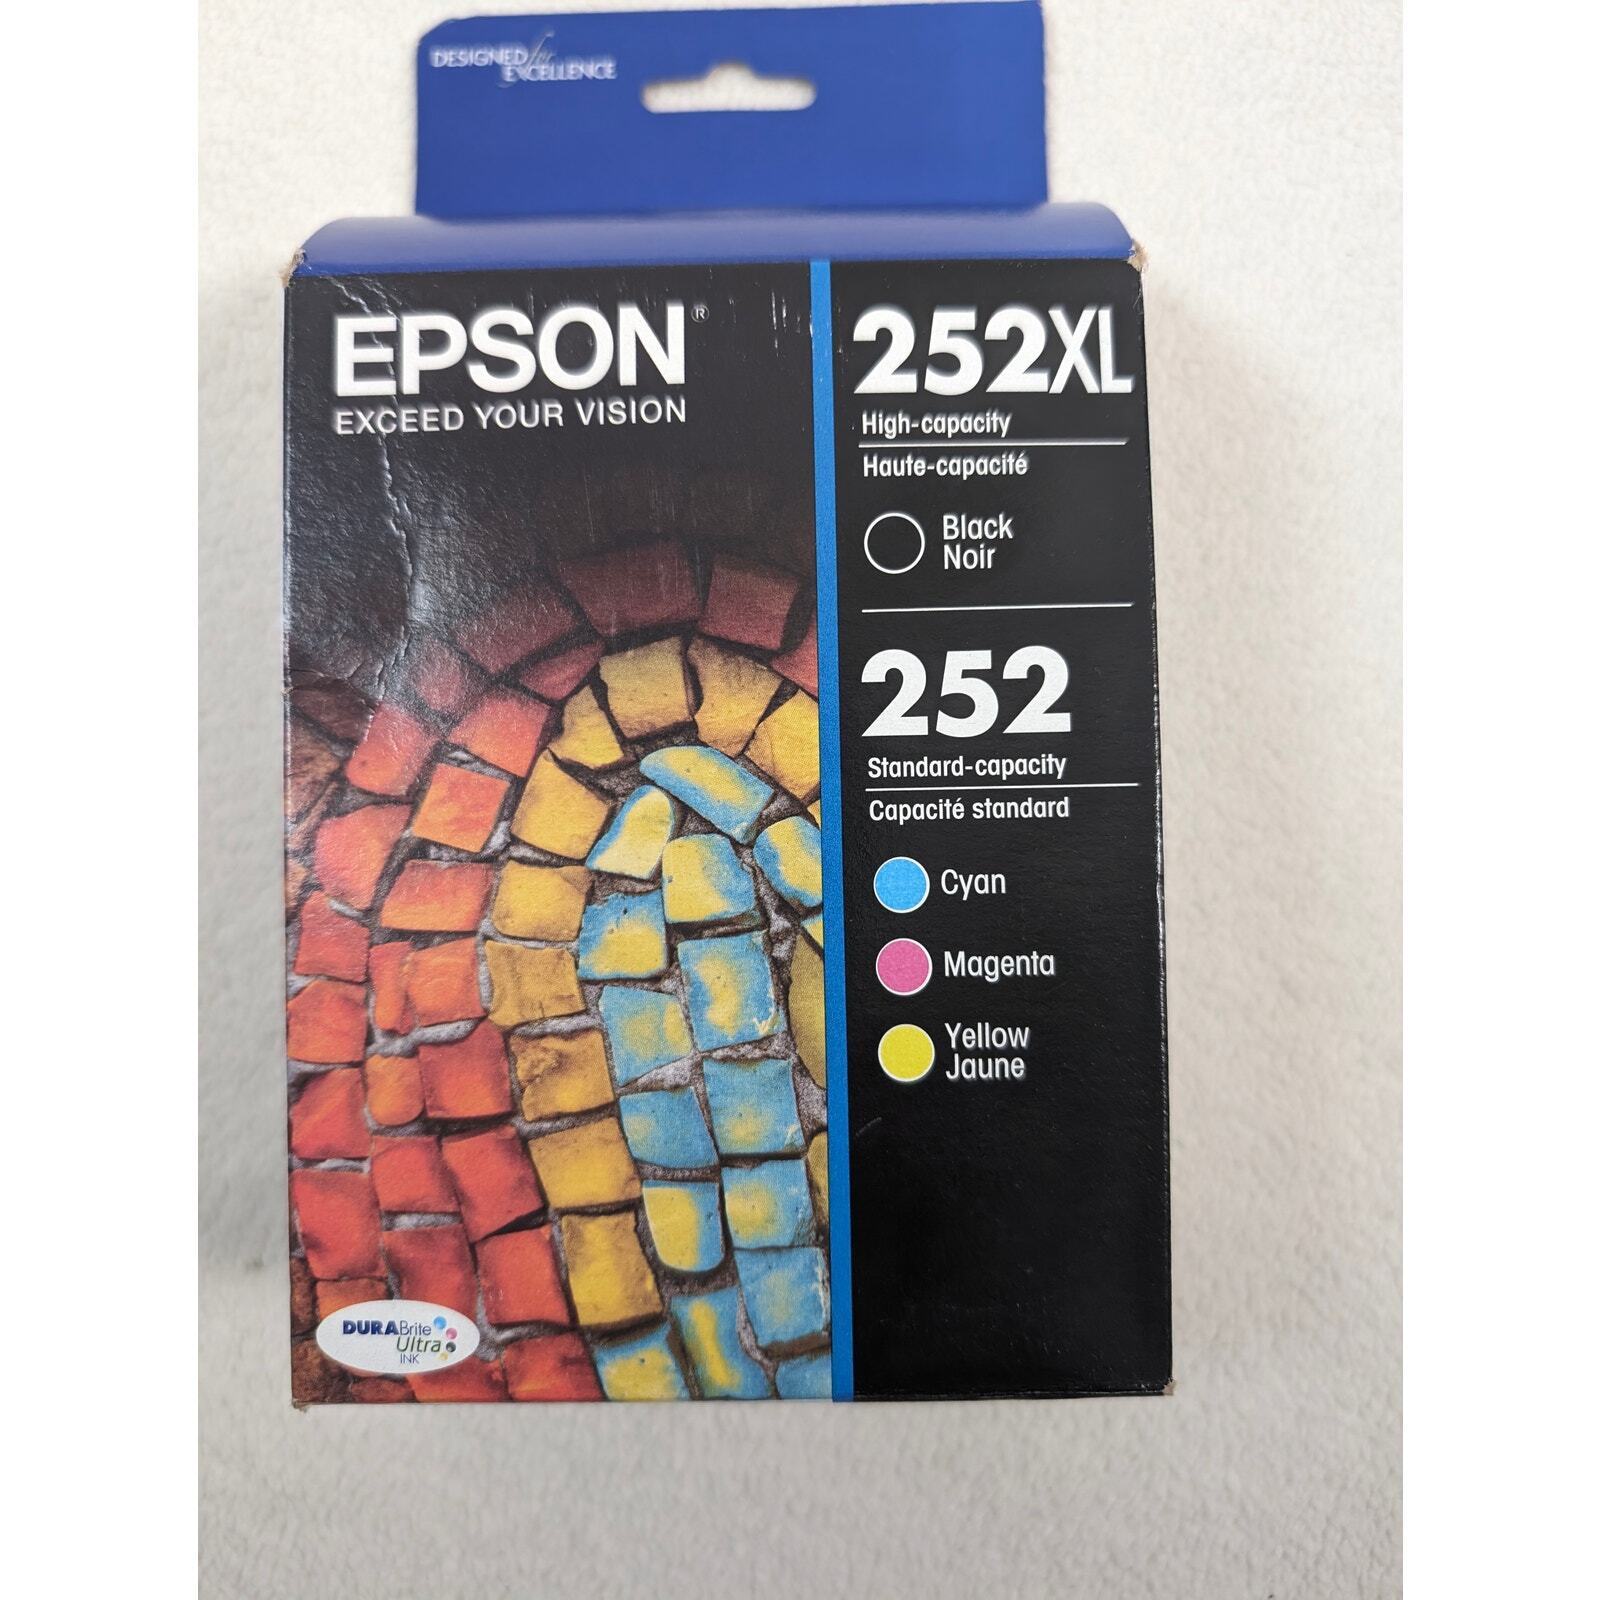 Epson 252XL High-capacity Ink Cartridge Cyan Magenta Yellow Black 